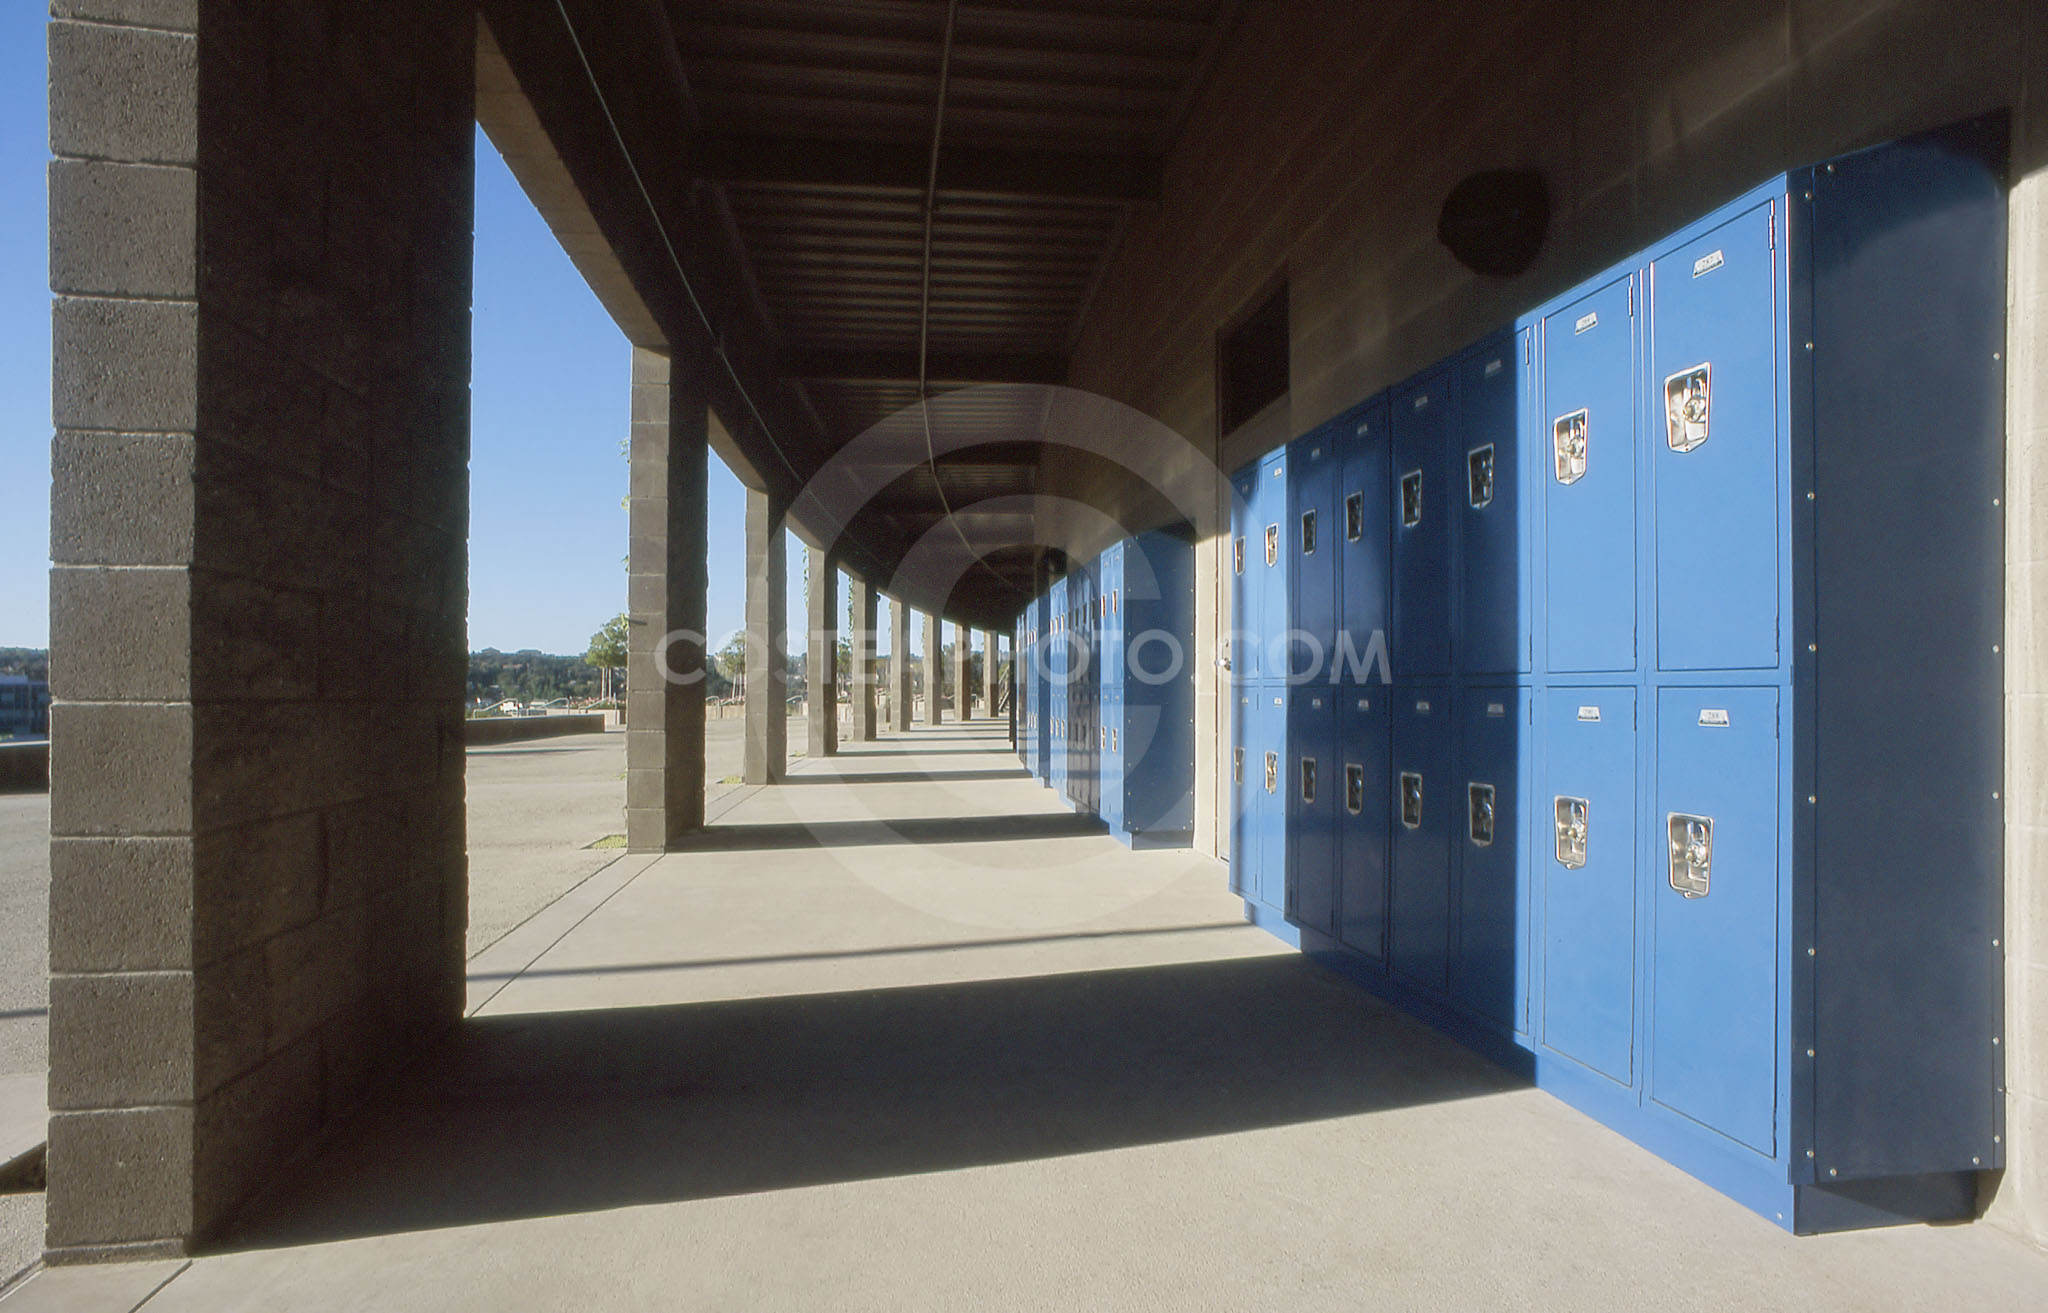 Outdoors lockers